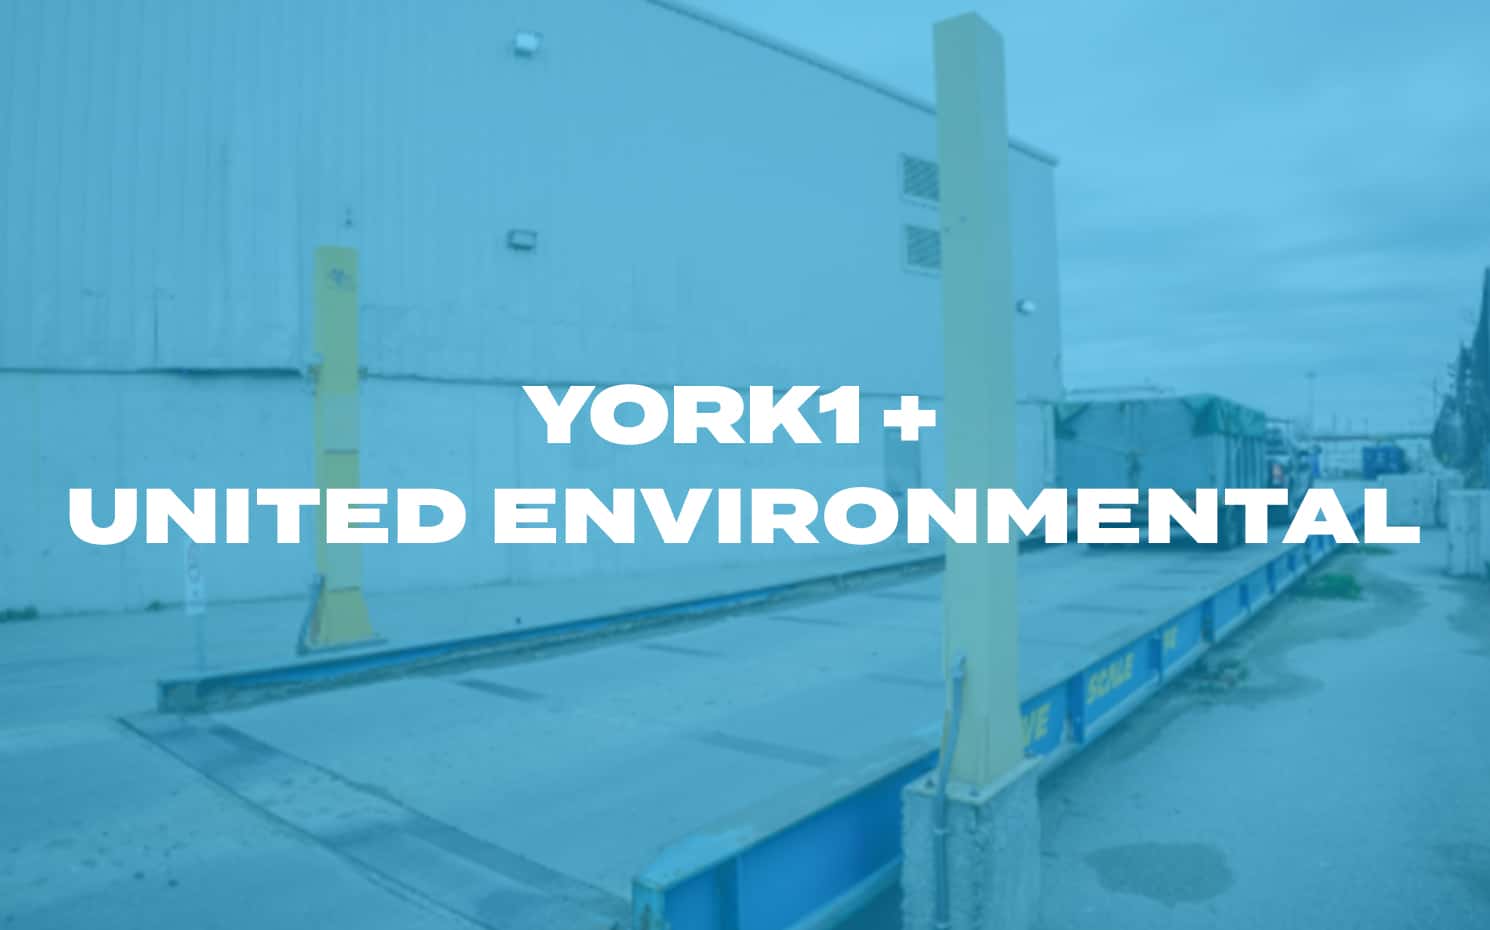 York1 + United Environmental weigh scale